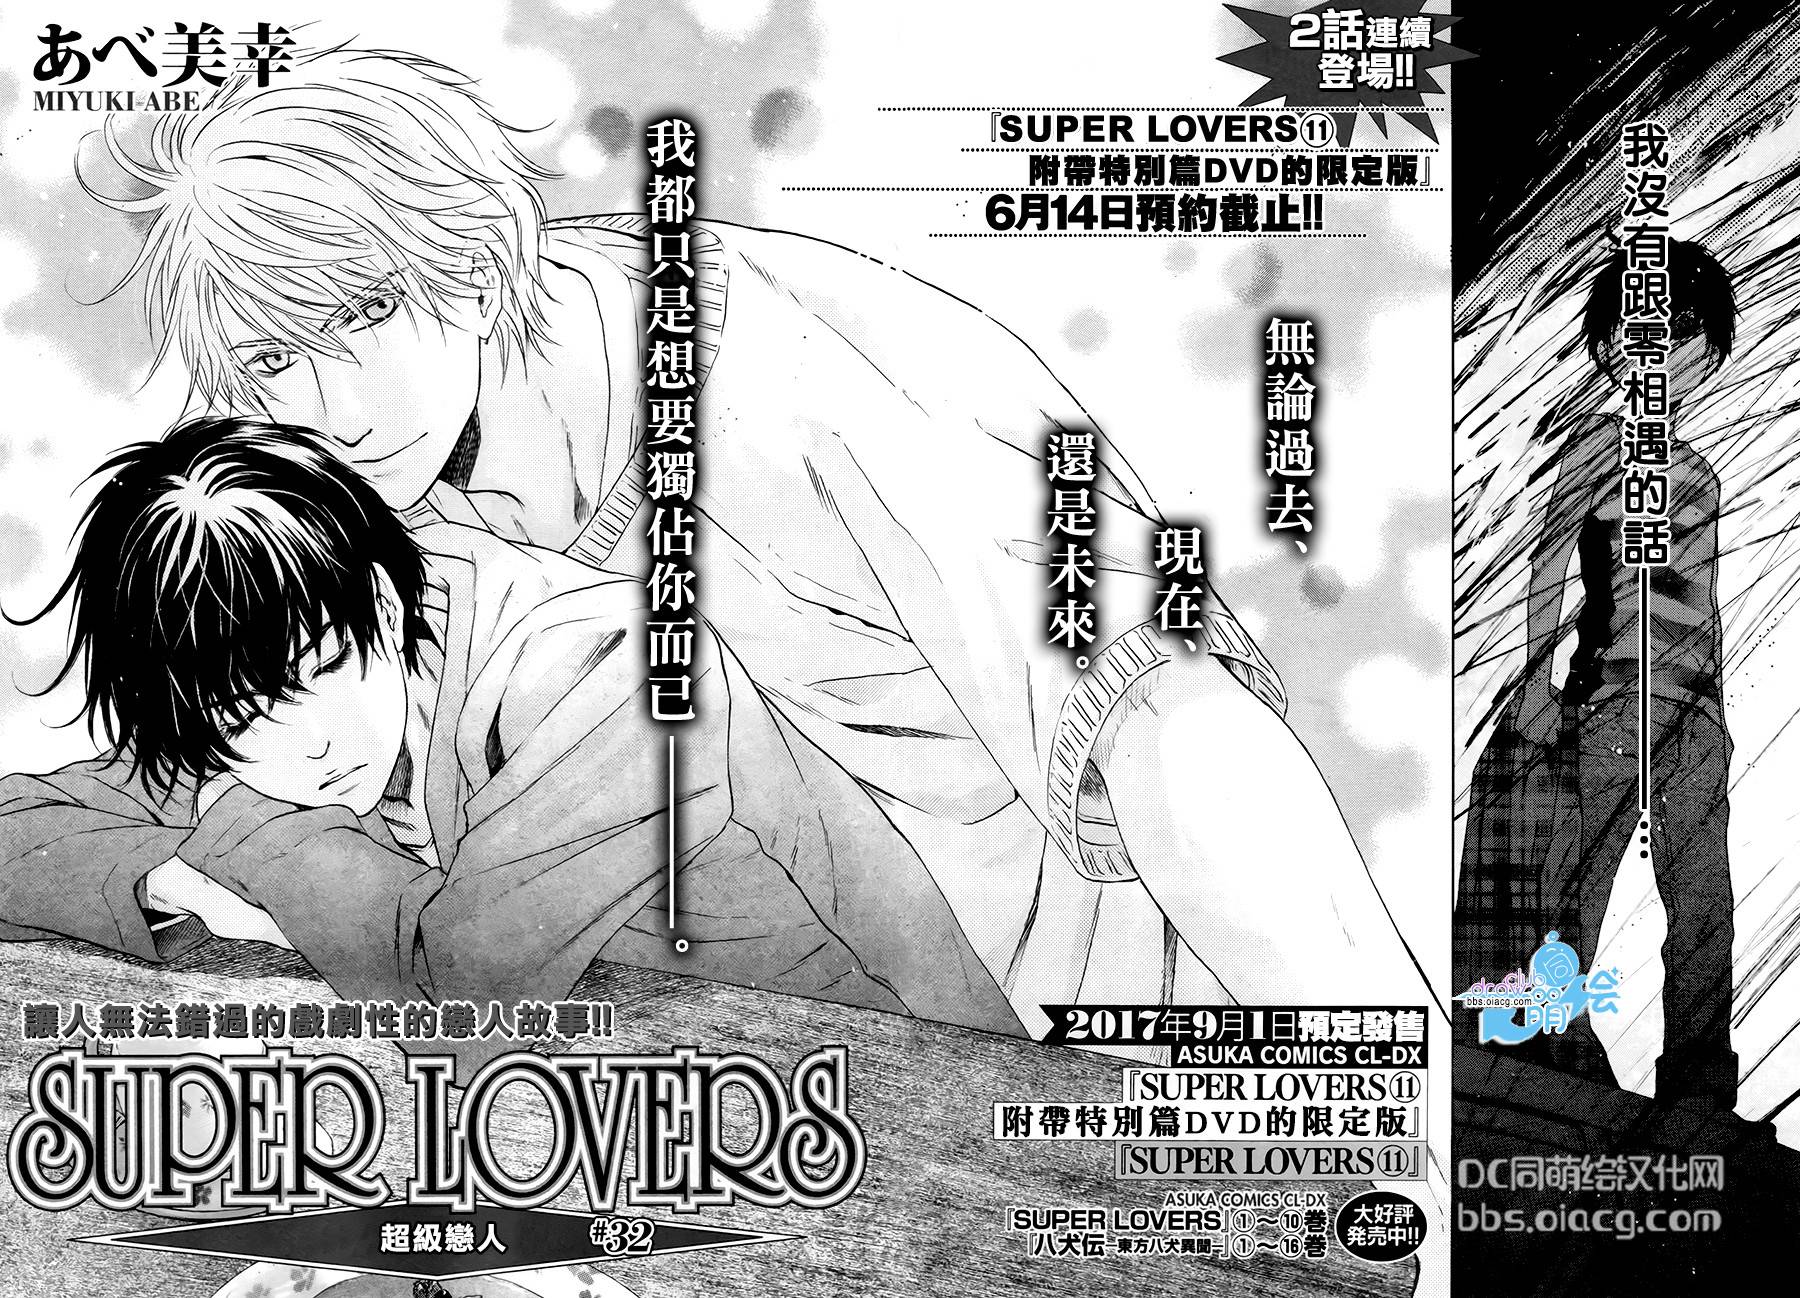 Super Lovers 第32話 漫畫線上看 動漫戲說 Acgn Cc